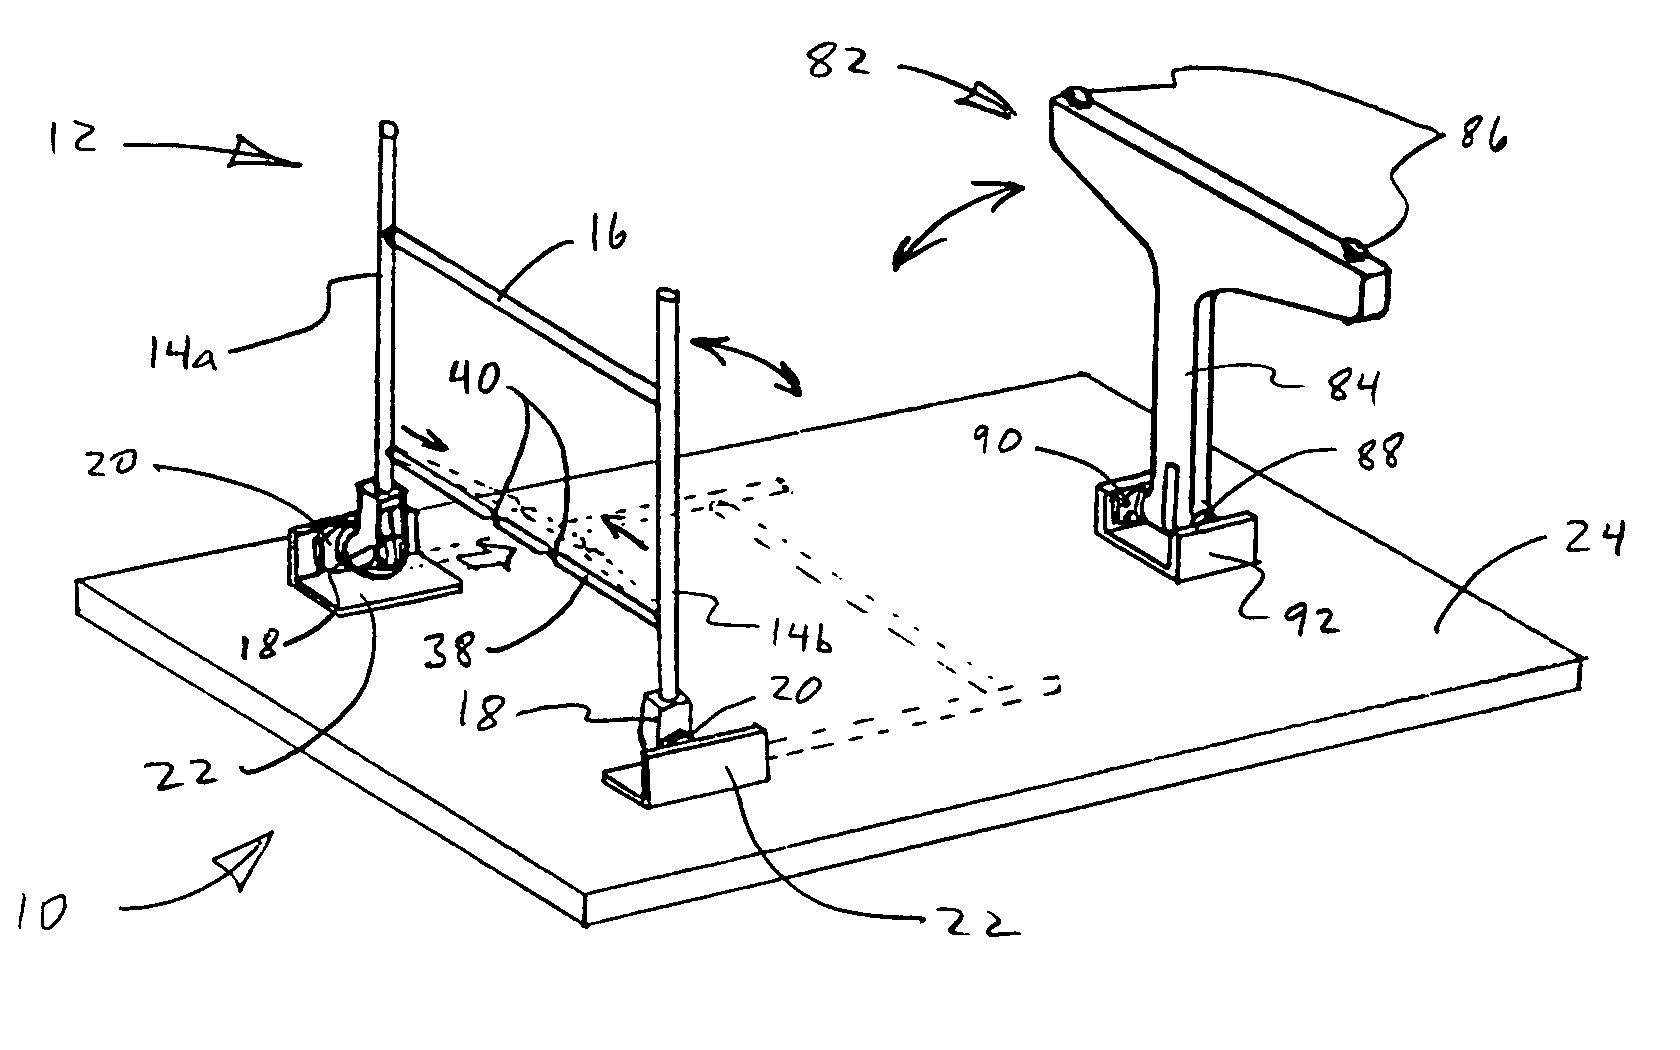 Locking mechanism for folding legs